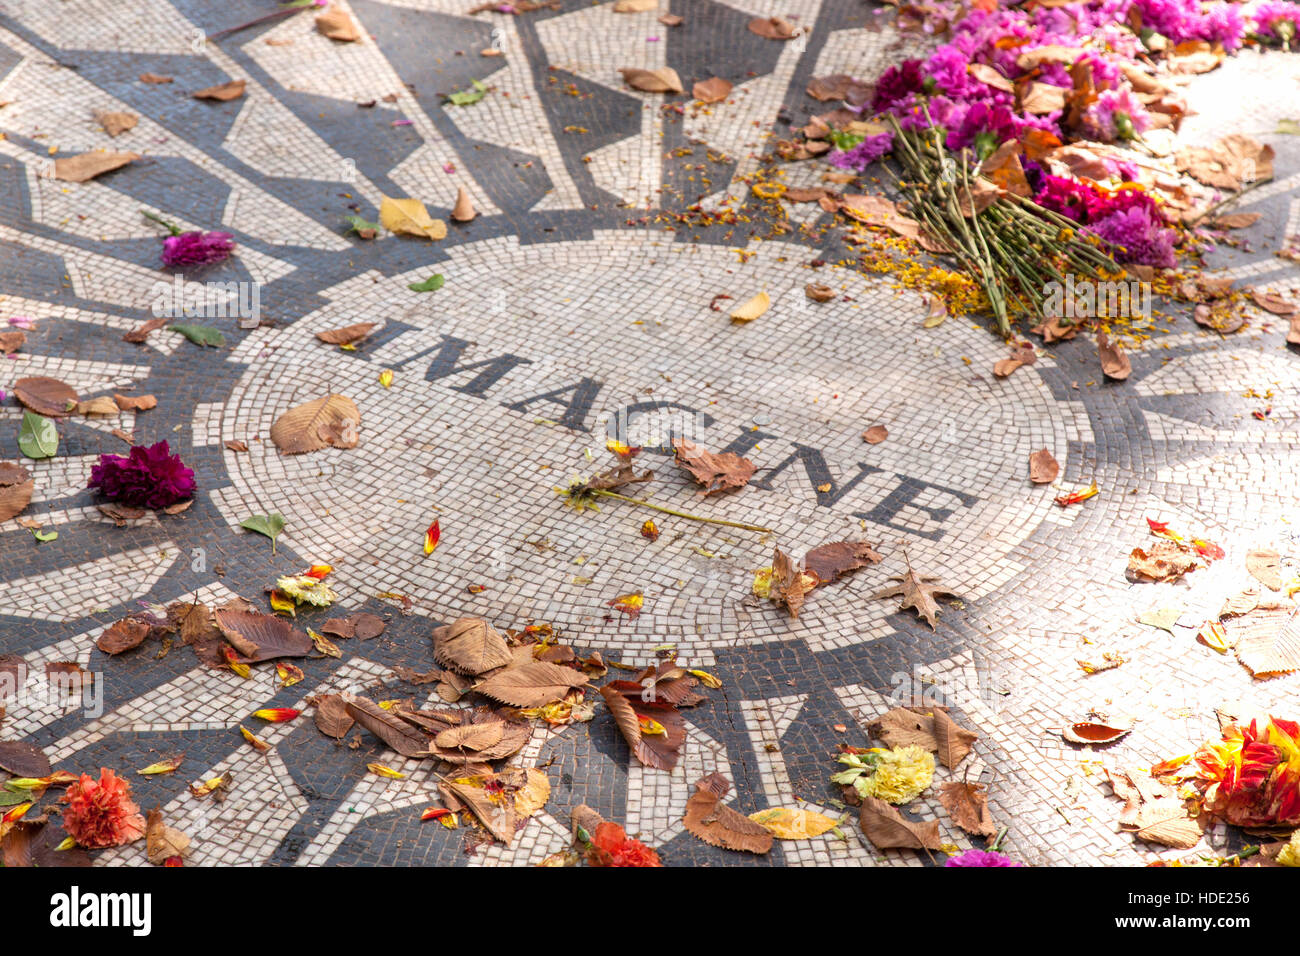 John Lennon memorial mosaic strawberry fields, New York City, United States of America. Stock Photo